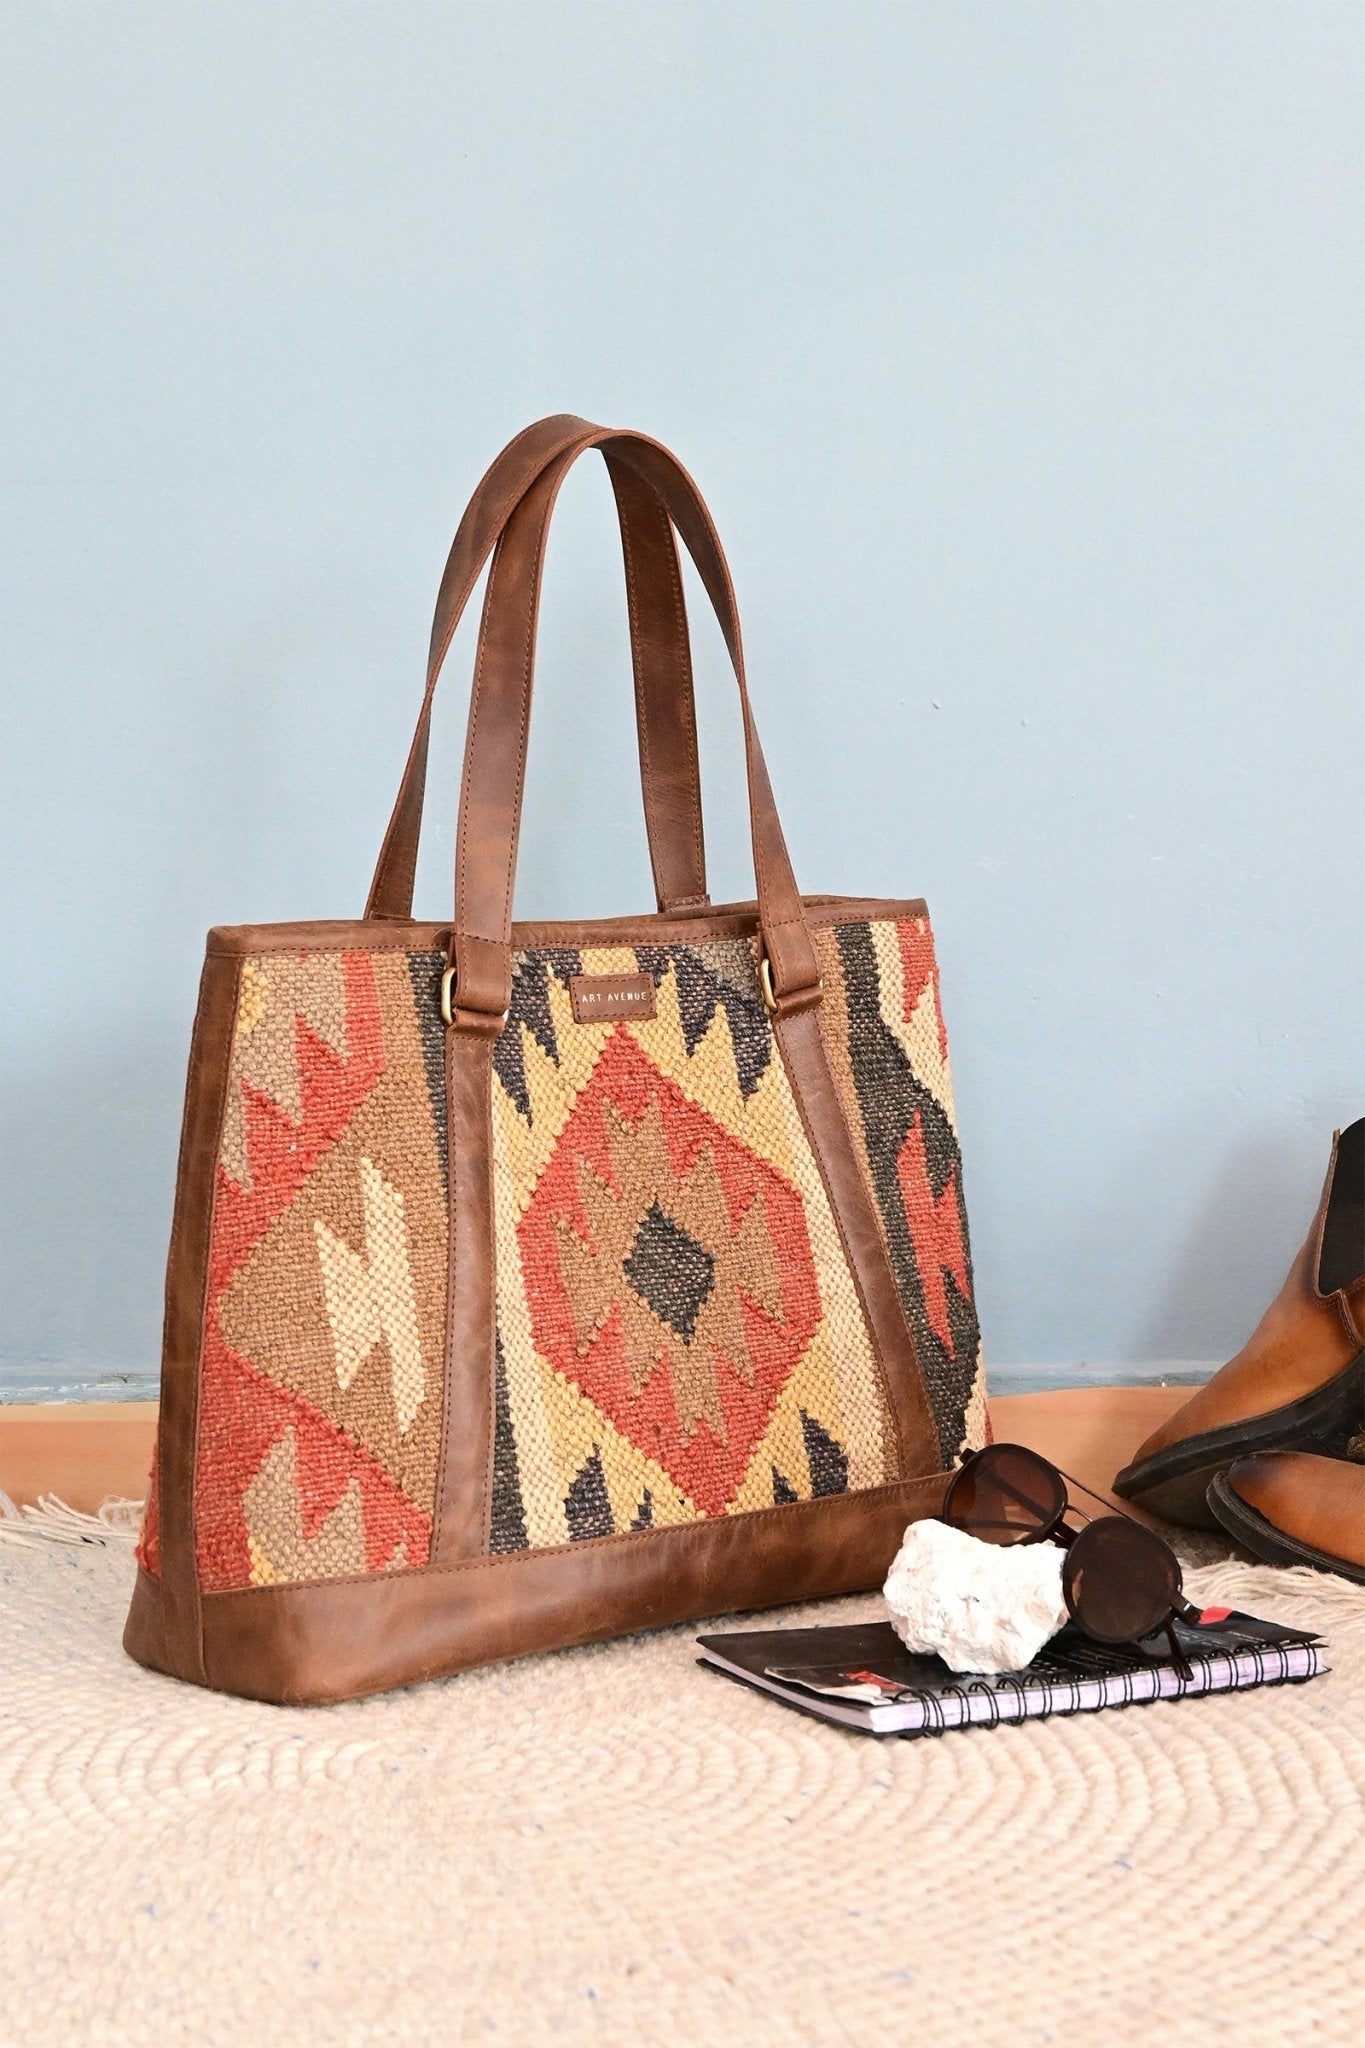 Turkish Kilim Bag Handmade Wool Woven Design Vintage Look | eBay